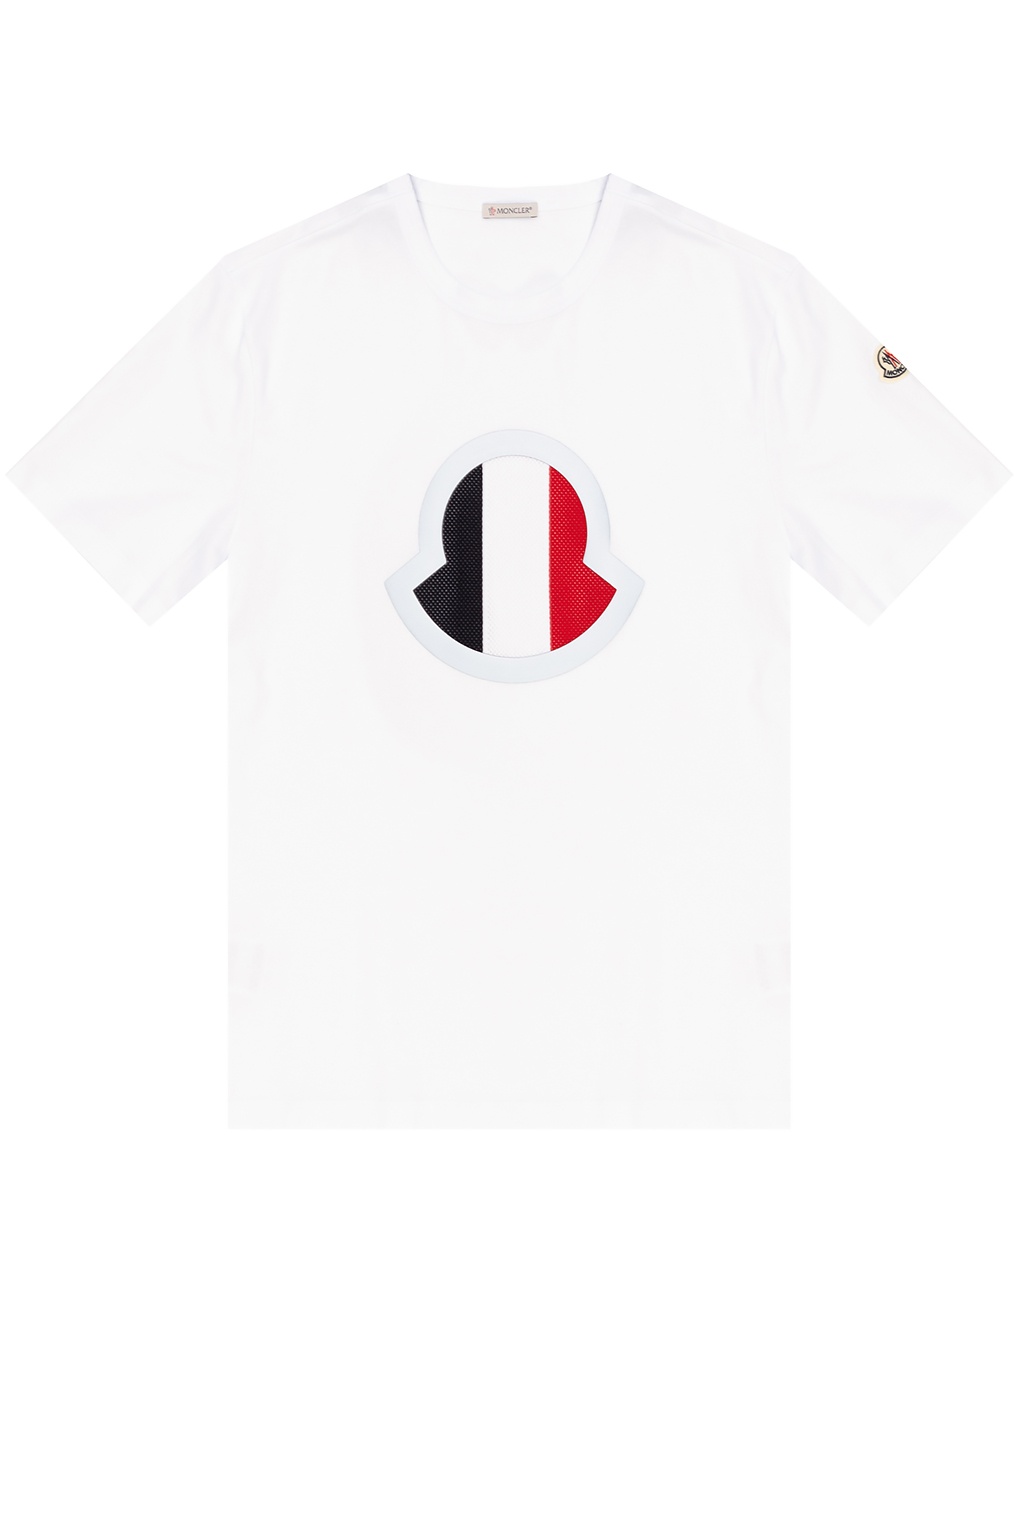 Moncler T-shirt with logo | Men's Clothing | IetpShops